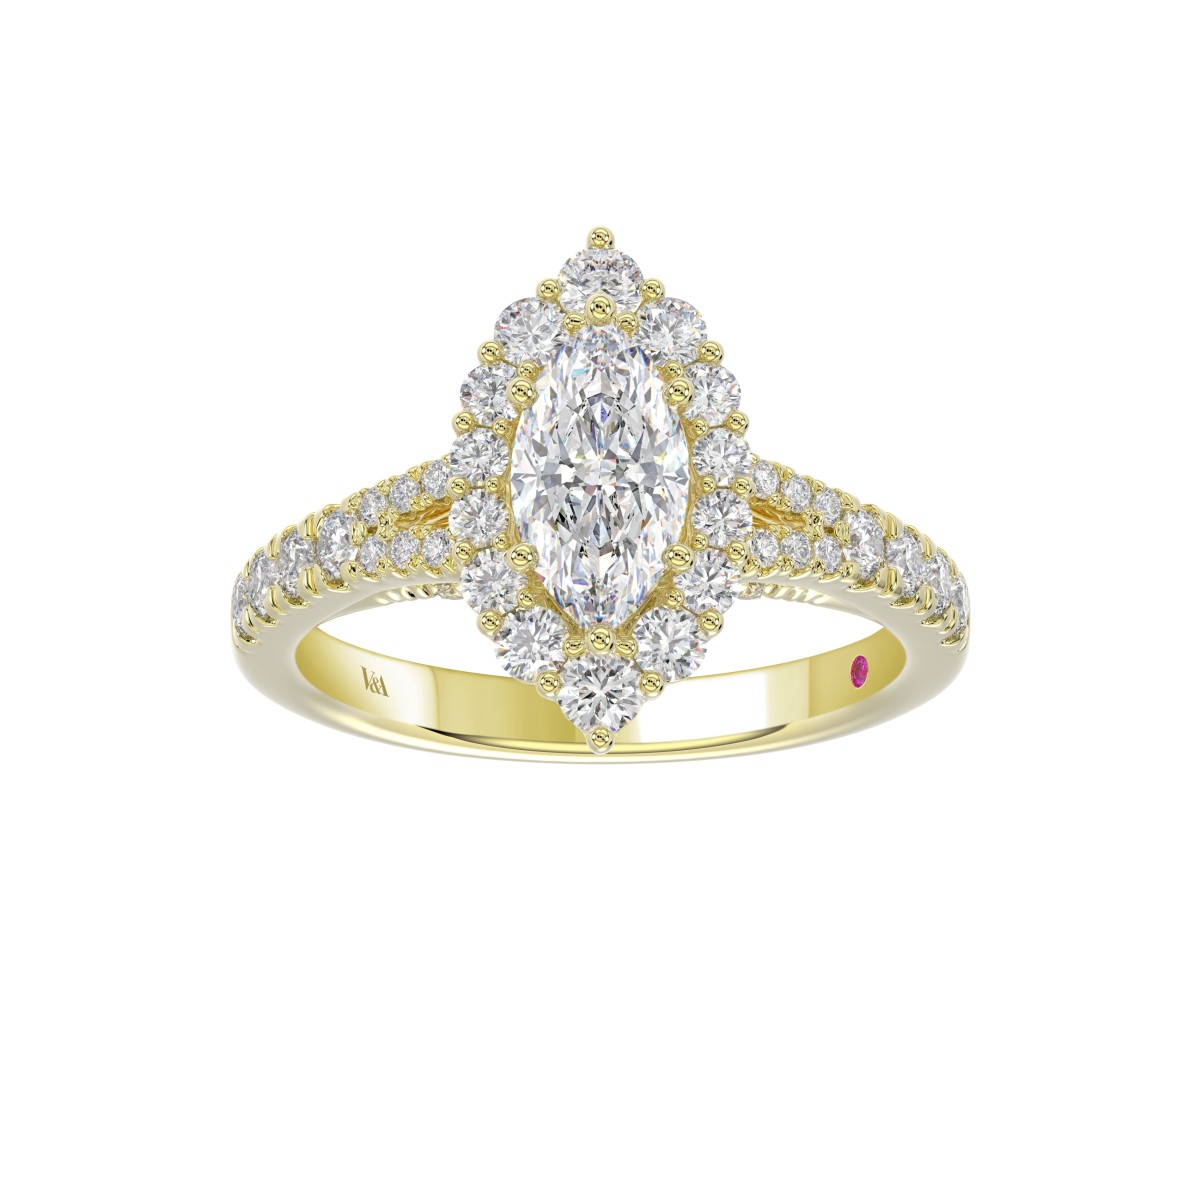 18K YELLOW GOLD 1 3/4CT ROUND/MARQUISE DIAMOND LADIES RING(CENTER STONE MARQUISE DIAMOND 1CT)